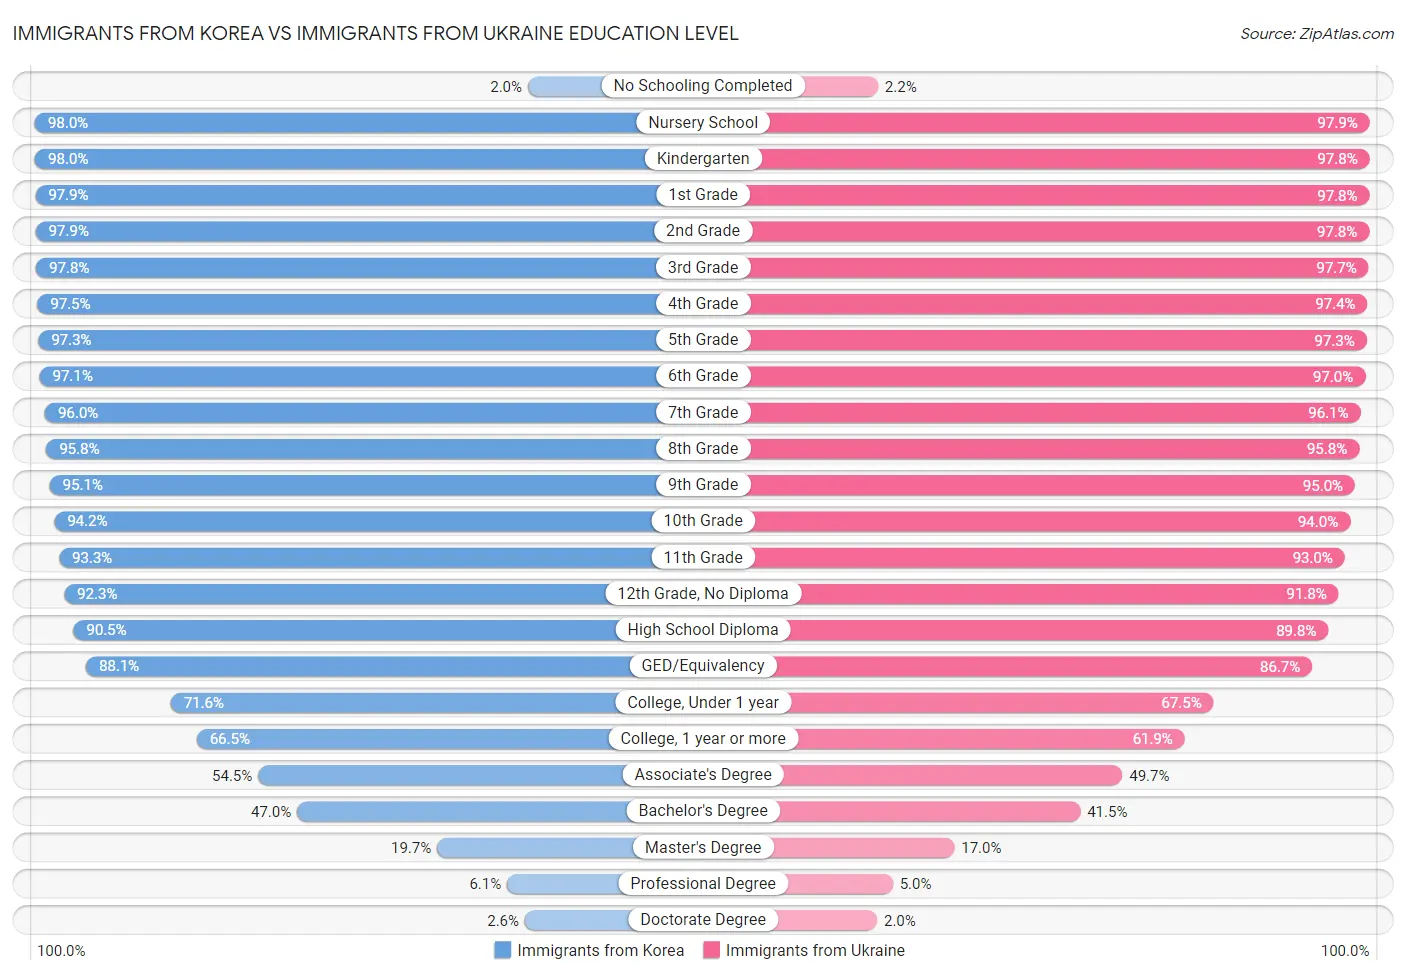 Immigrants from Korea vs Immigrants from Ukraine Education Level